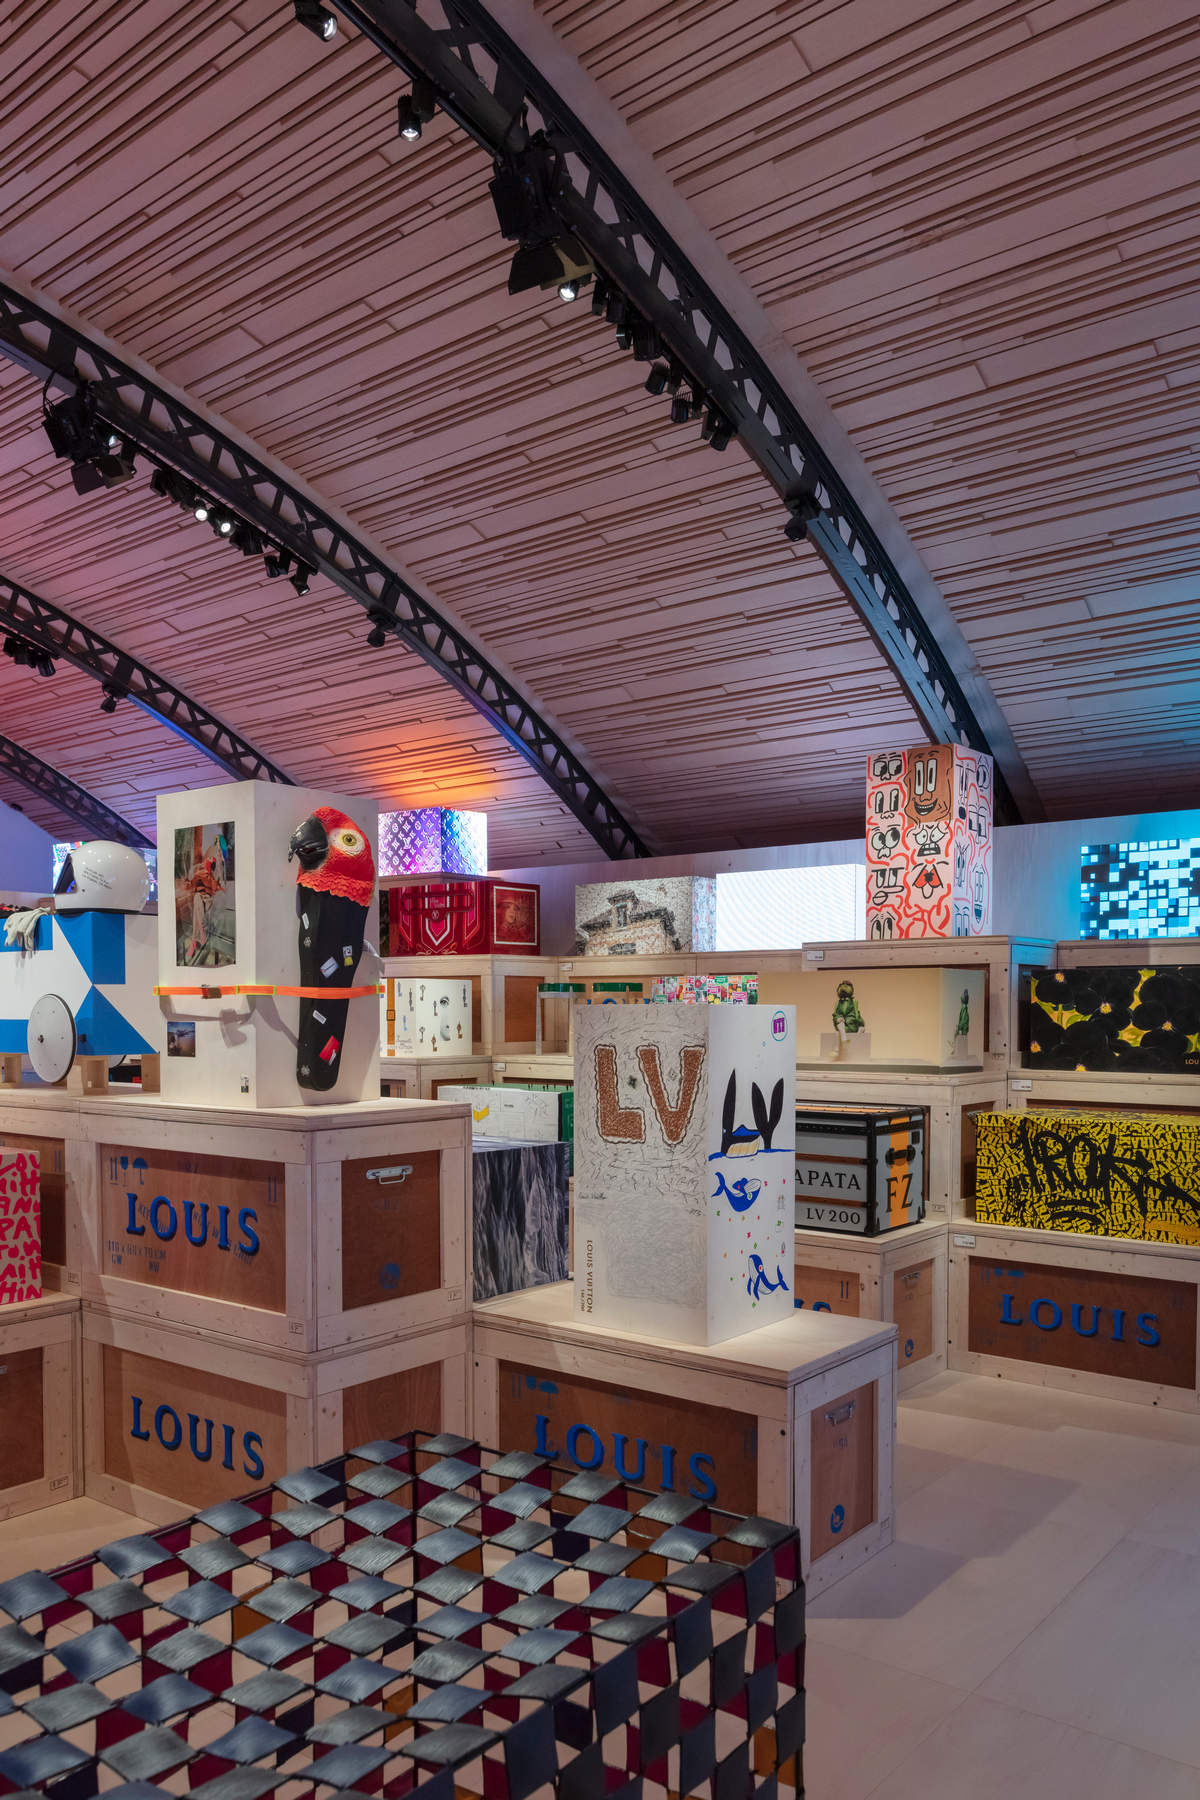 200 trunks, 200 visionaries: Celebrating Louis Vuitton's milestone